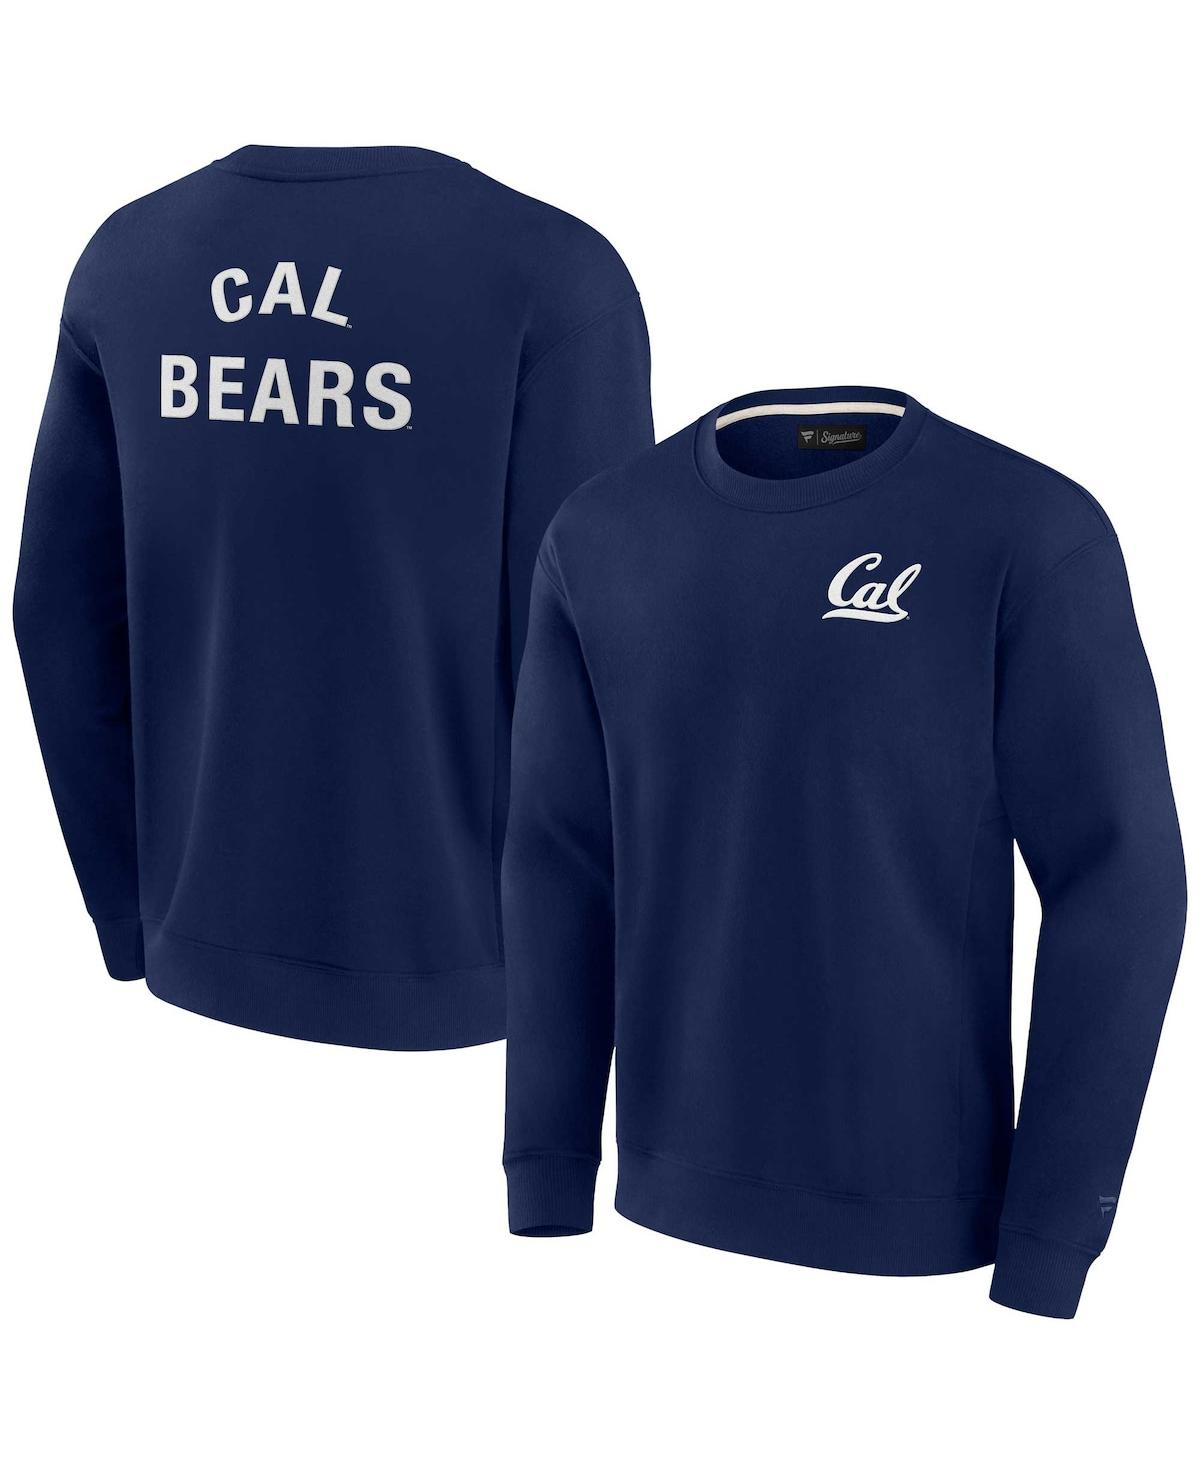 Men's and Women's Fanatics Signature Navy Cal Bears Super Soft Pullover Crew Sweatshirt - Navy